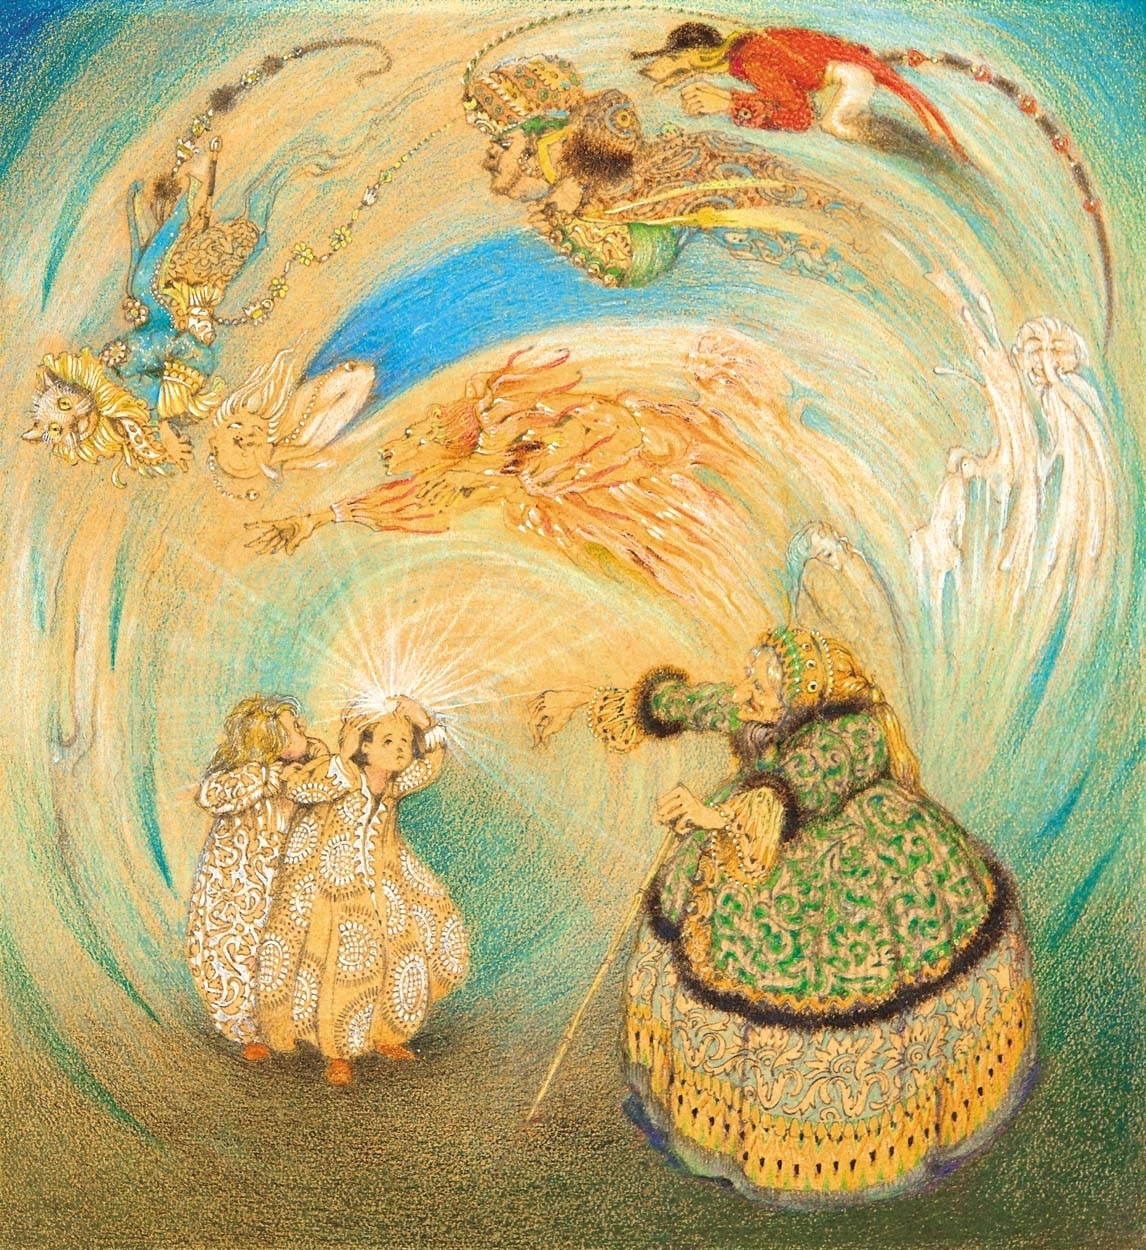 Jaschik Álmos (1885-1950) The Miracle Diamond (Illustration to Maurice Maeterlinck's "Blue Bird")